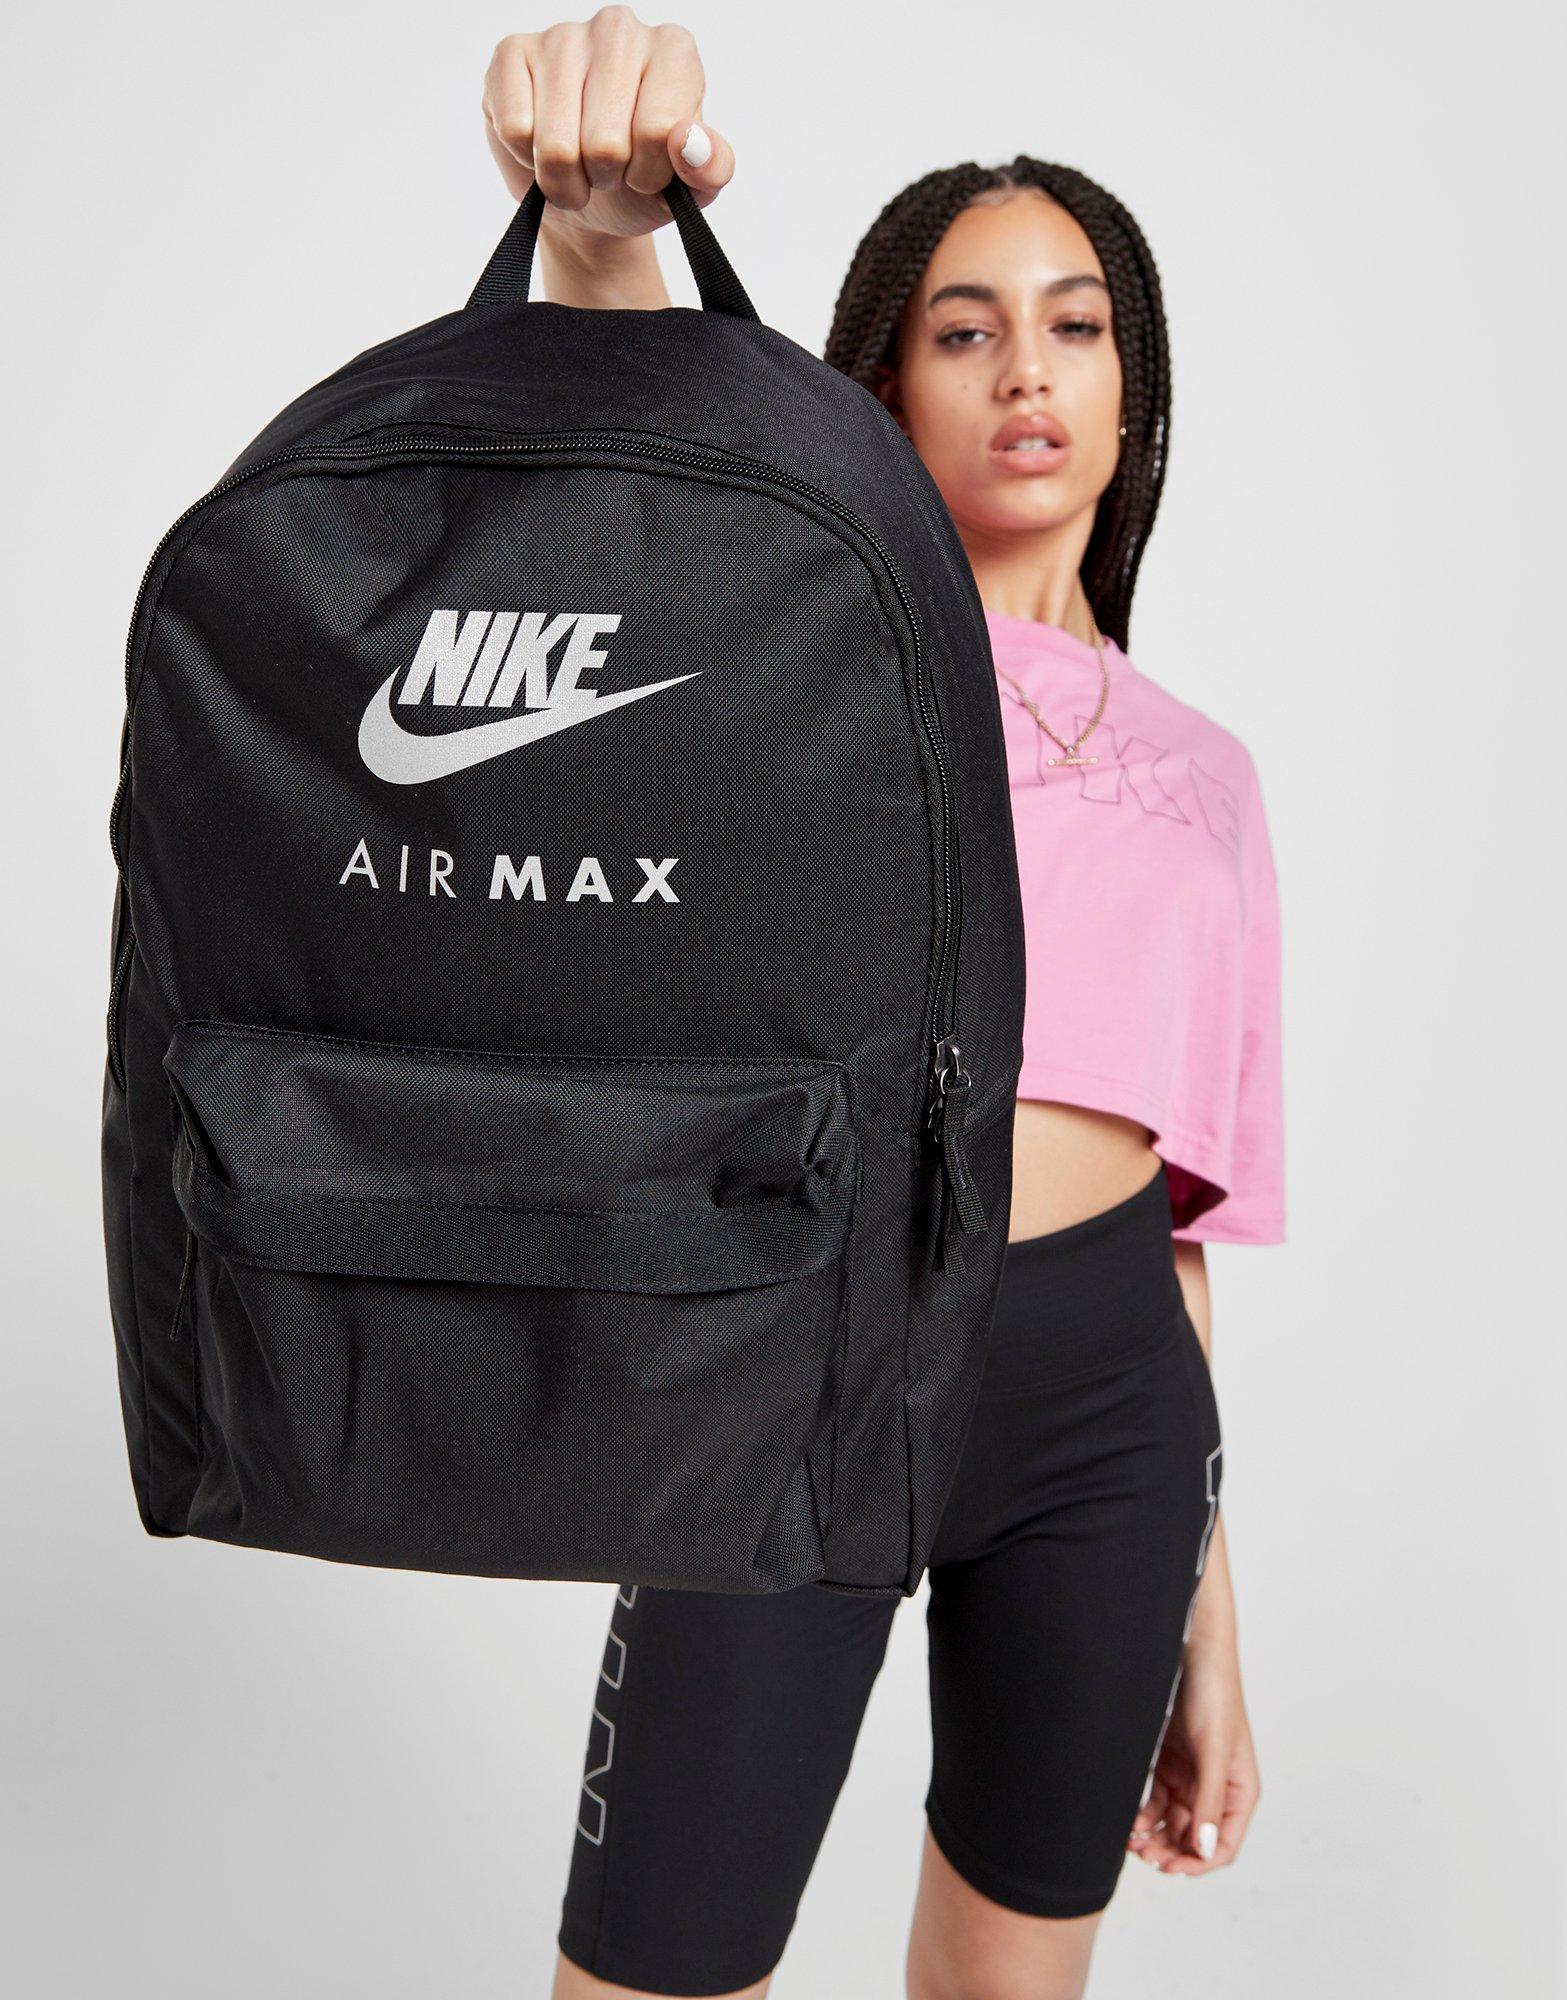 air max backpack black